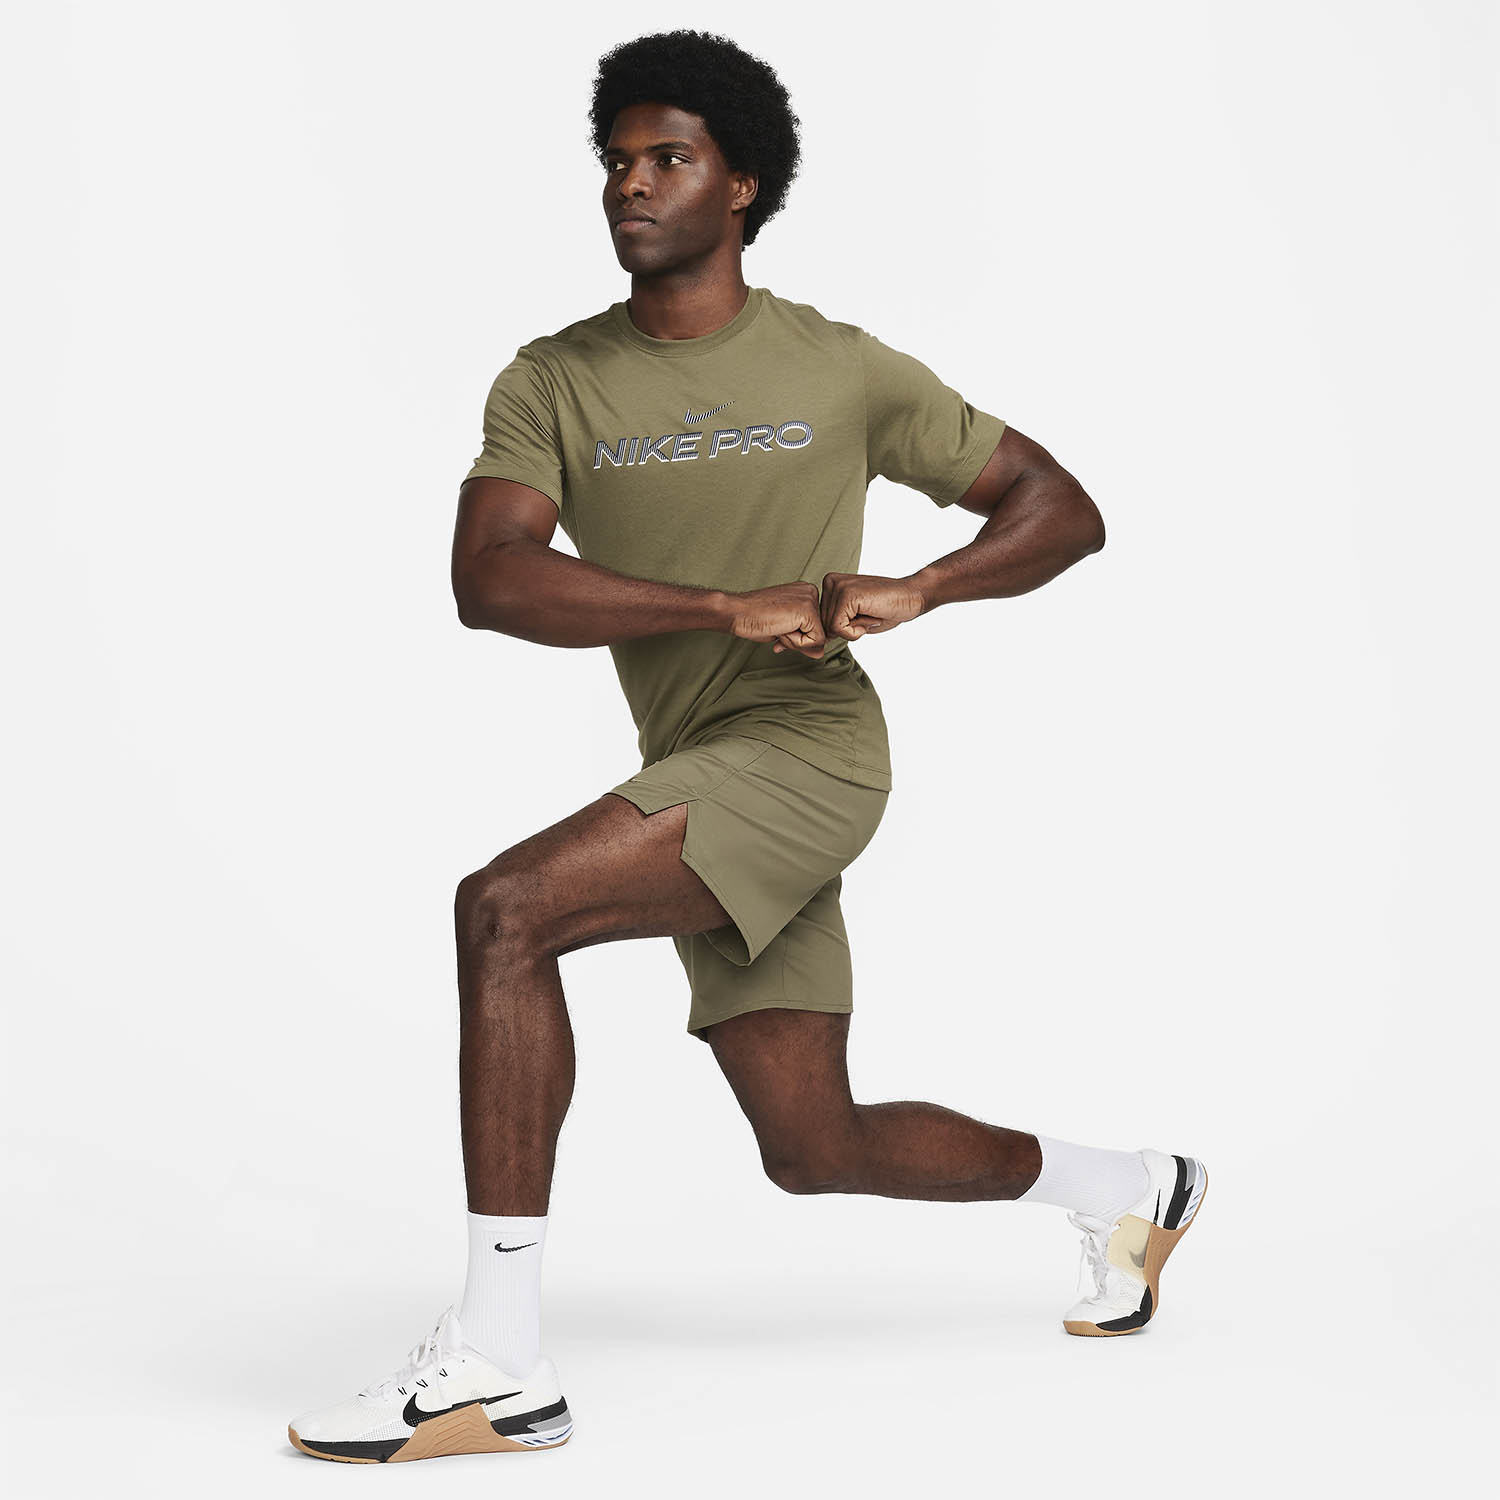 Nike Pro Fitness T-Shirt - Medium Olive